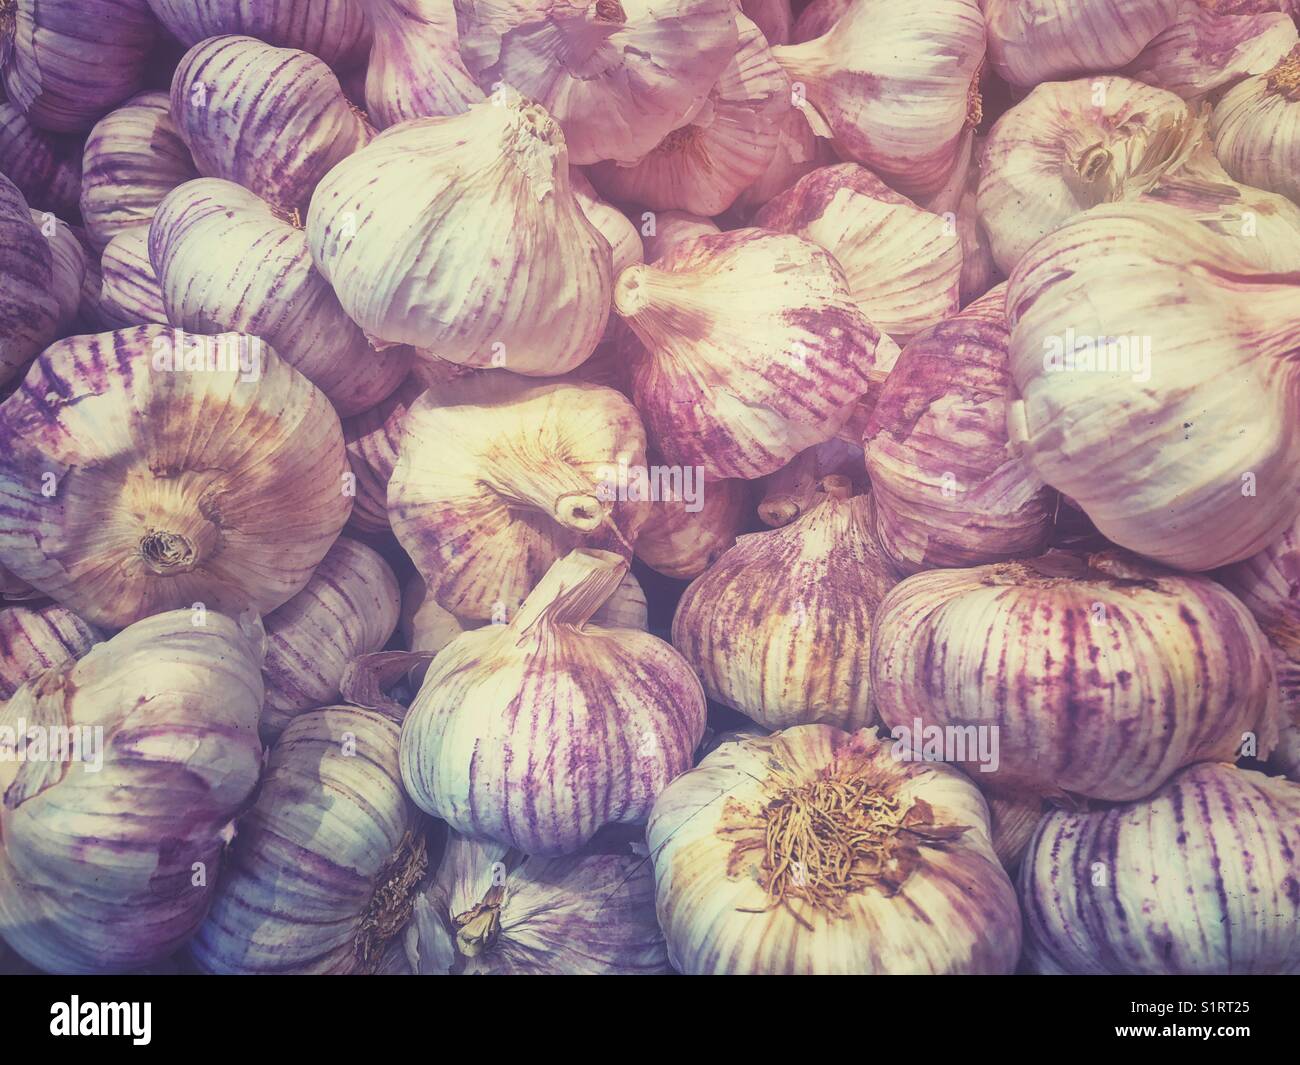 Full frame view of large purple skinned garlic bulbs Stock Photo